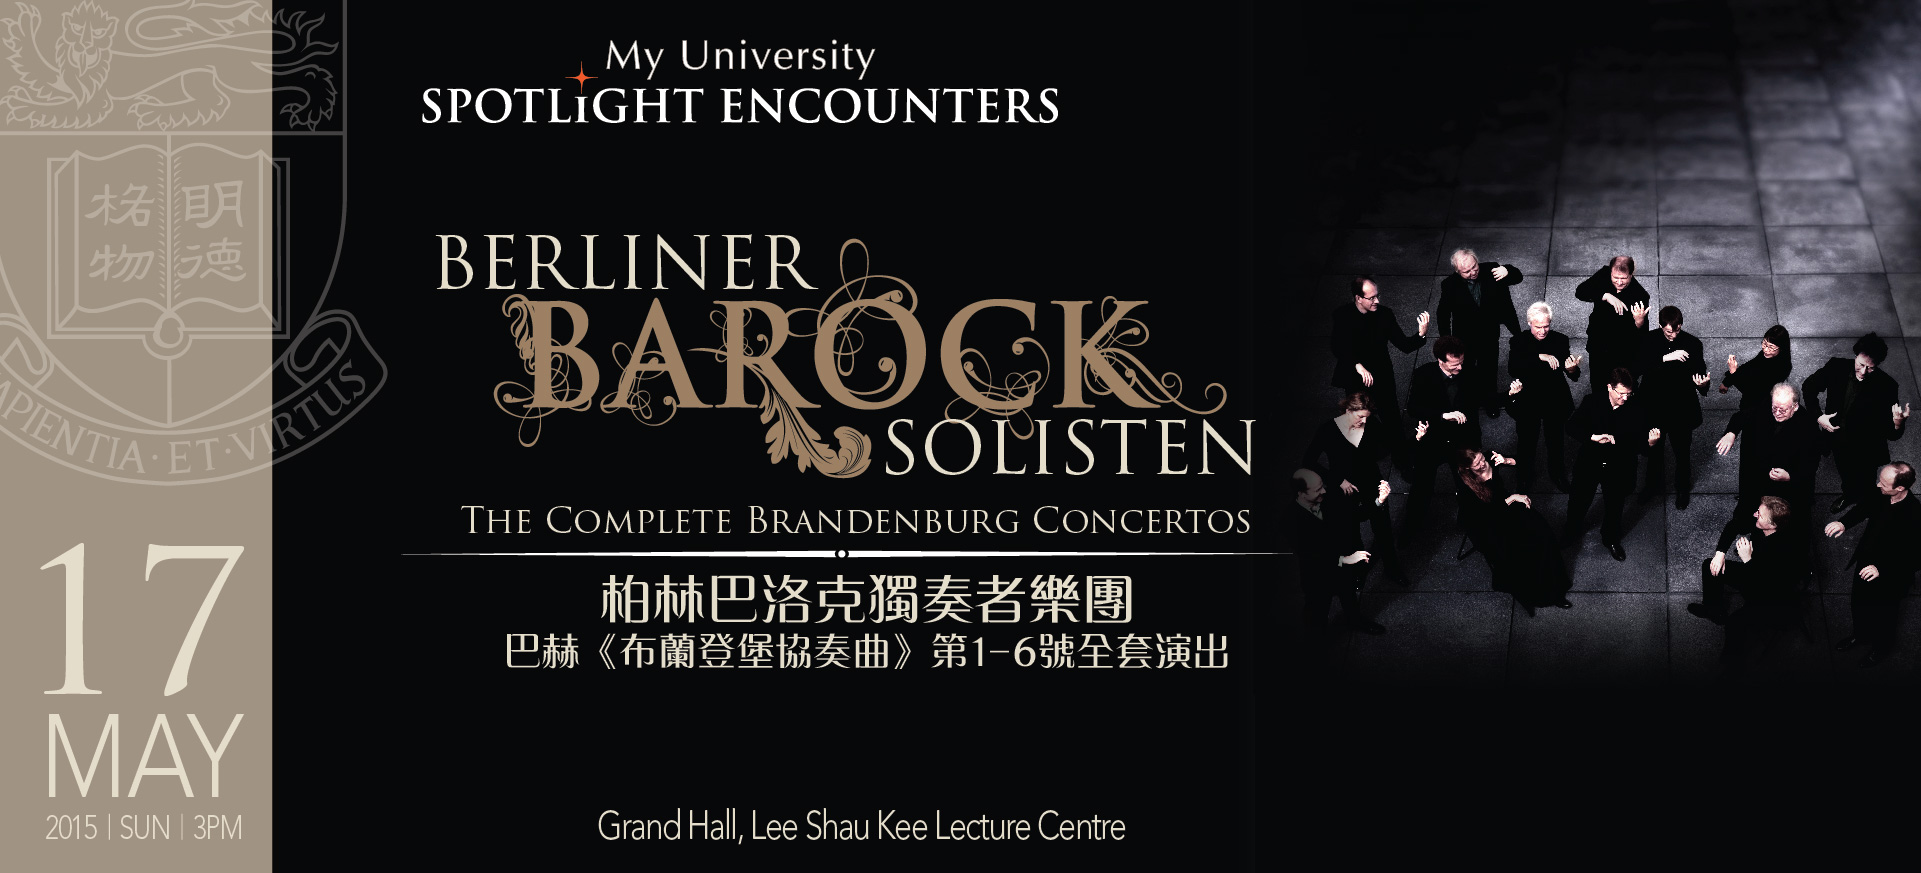 Berliner Barock Solisten presents the complete Brandenburg concertos at HKU